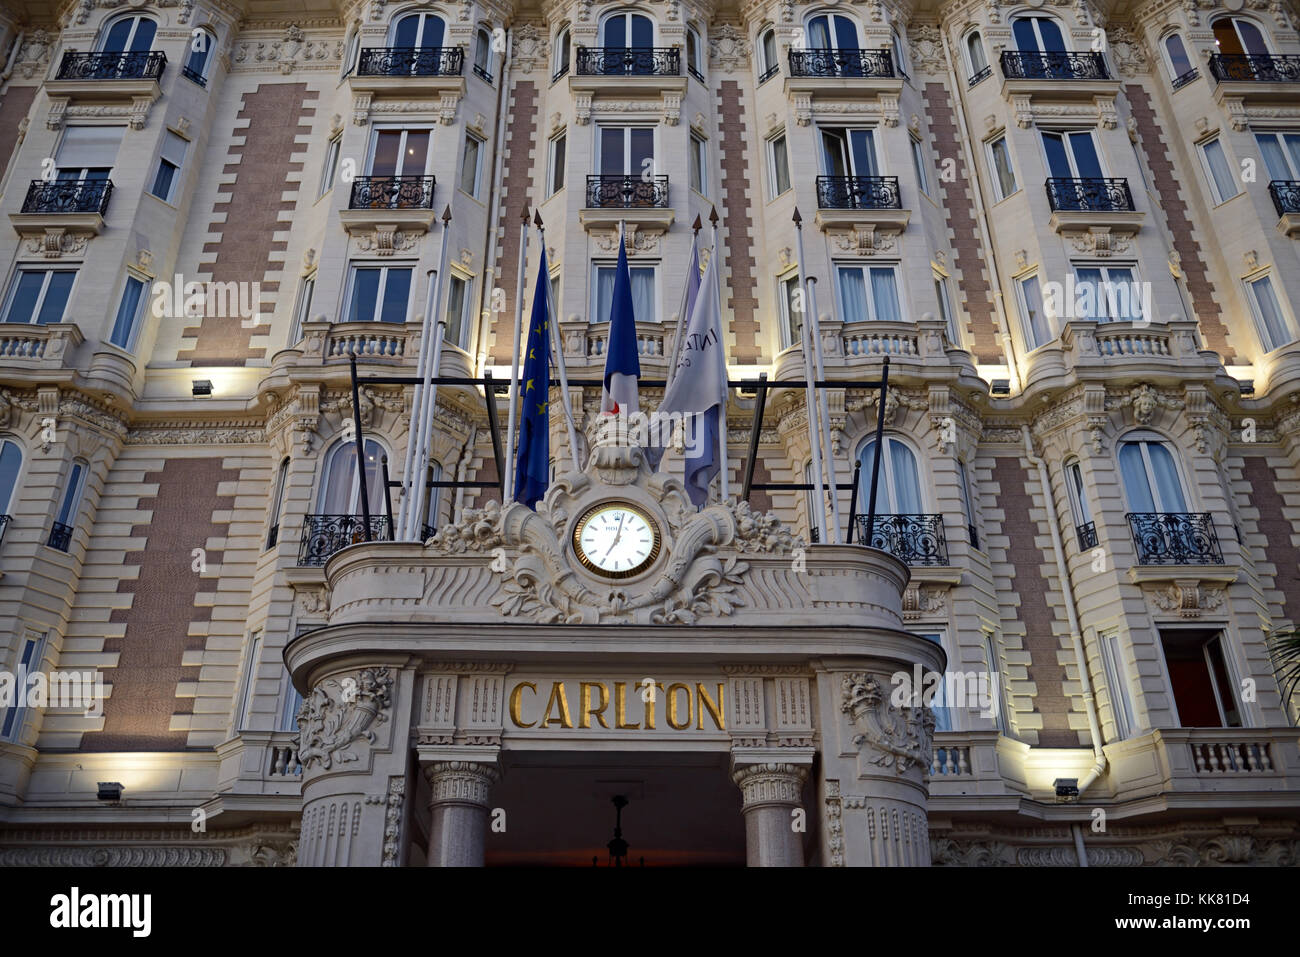 The Luxury InterContinental Carlton Hotel, built in 1911, on the Boulevard de la Croisette, Cannes, Alpes-Maritimes, France Stock Photo